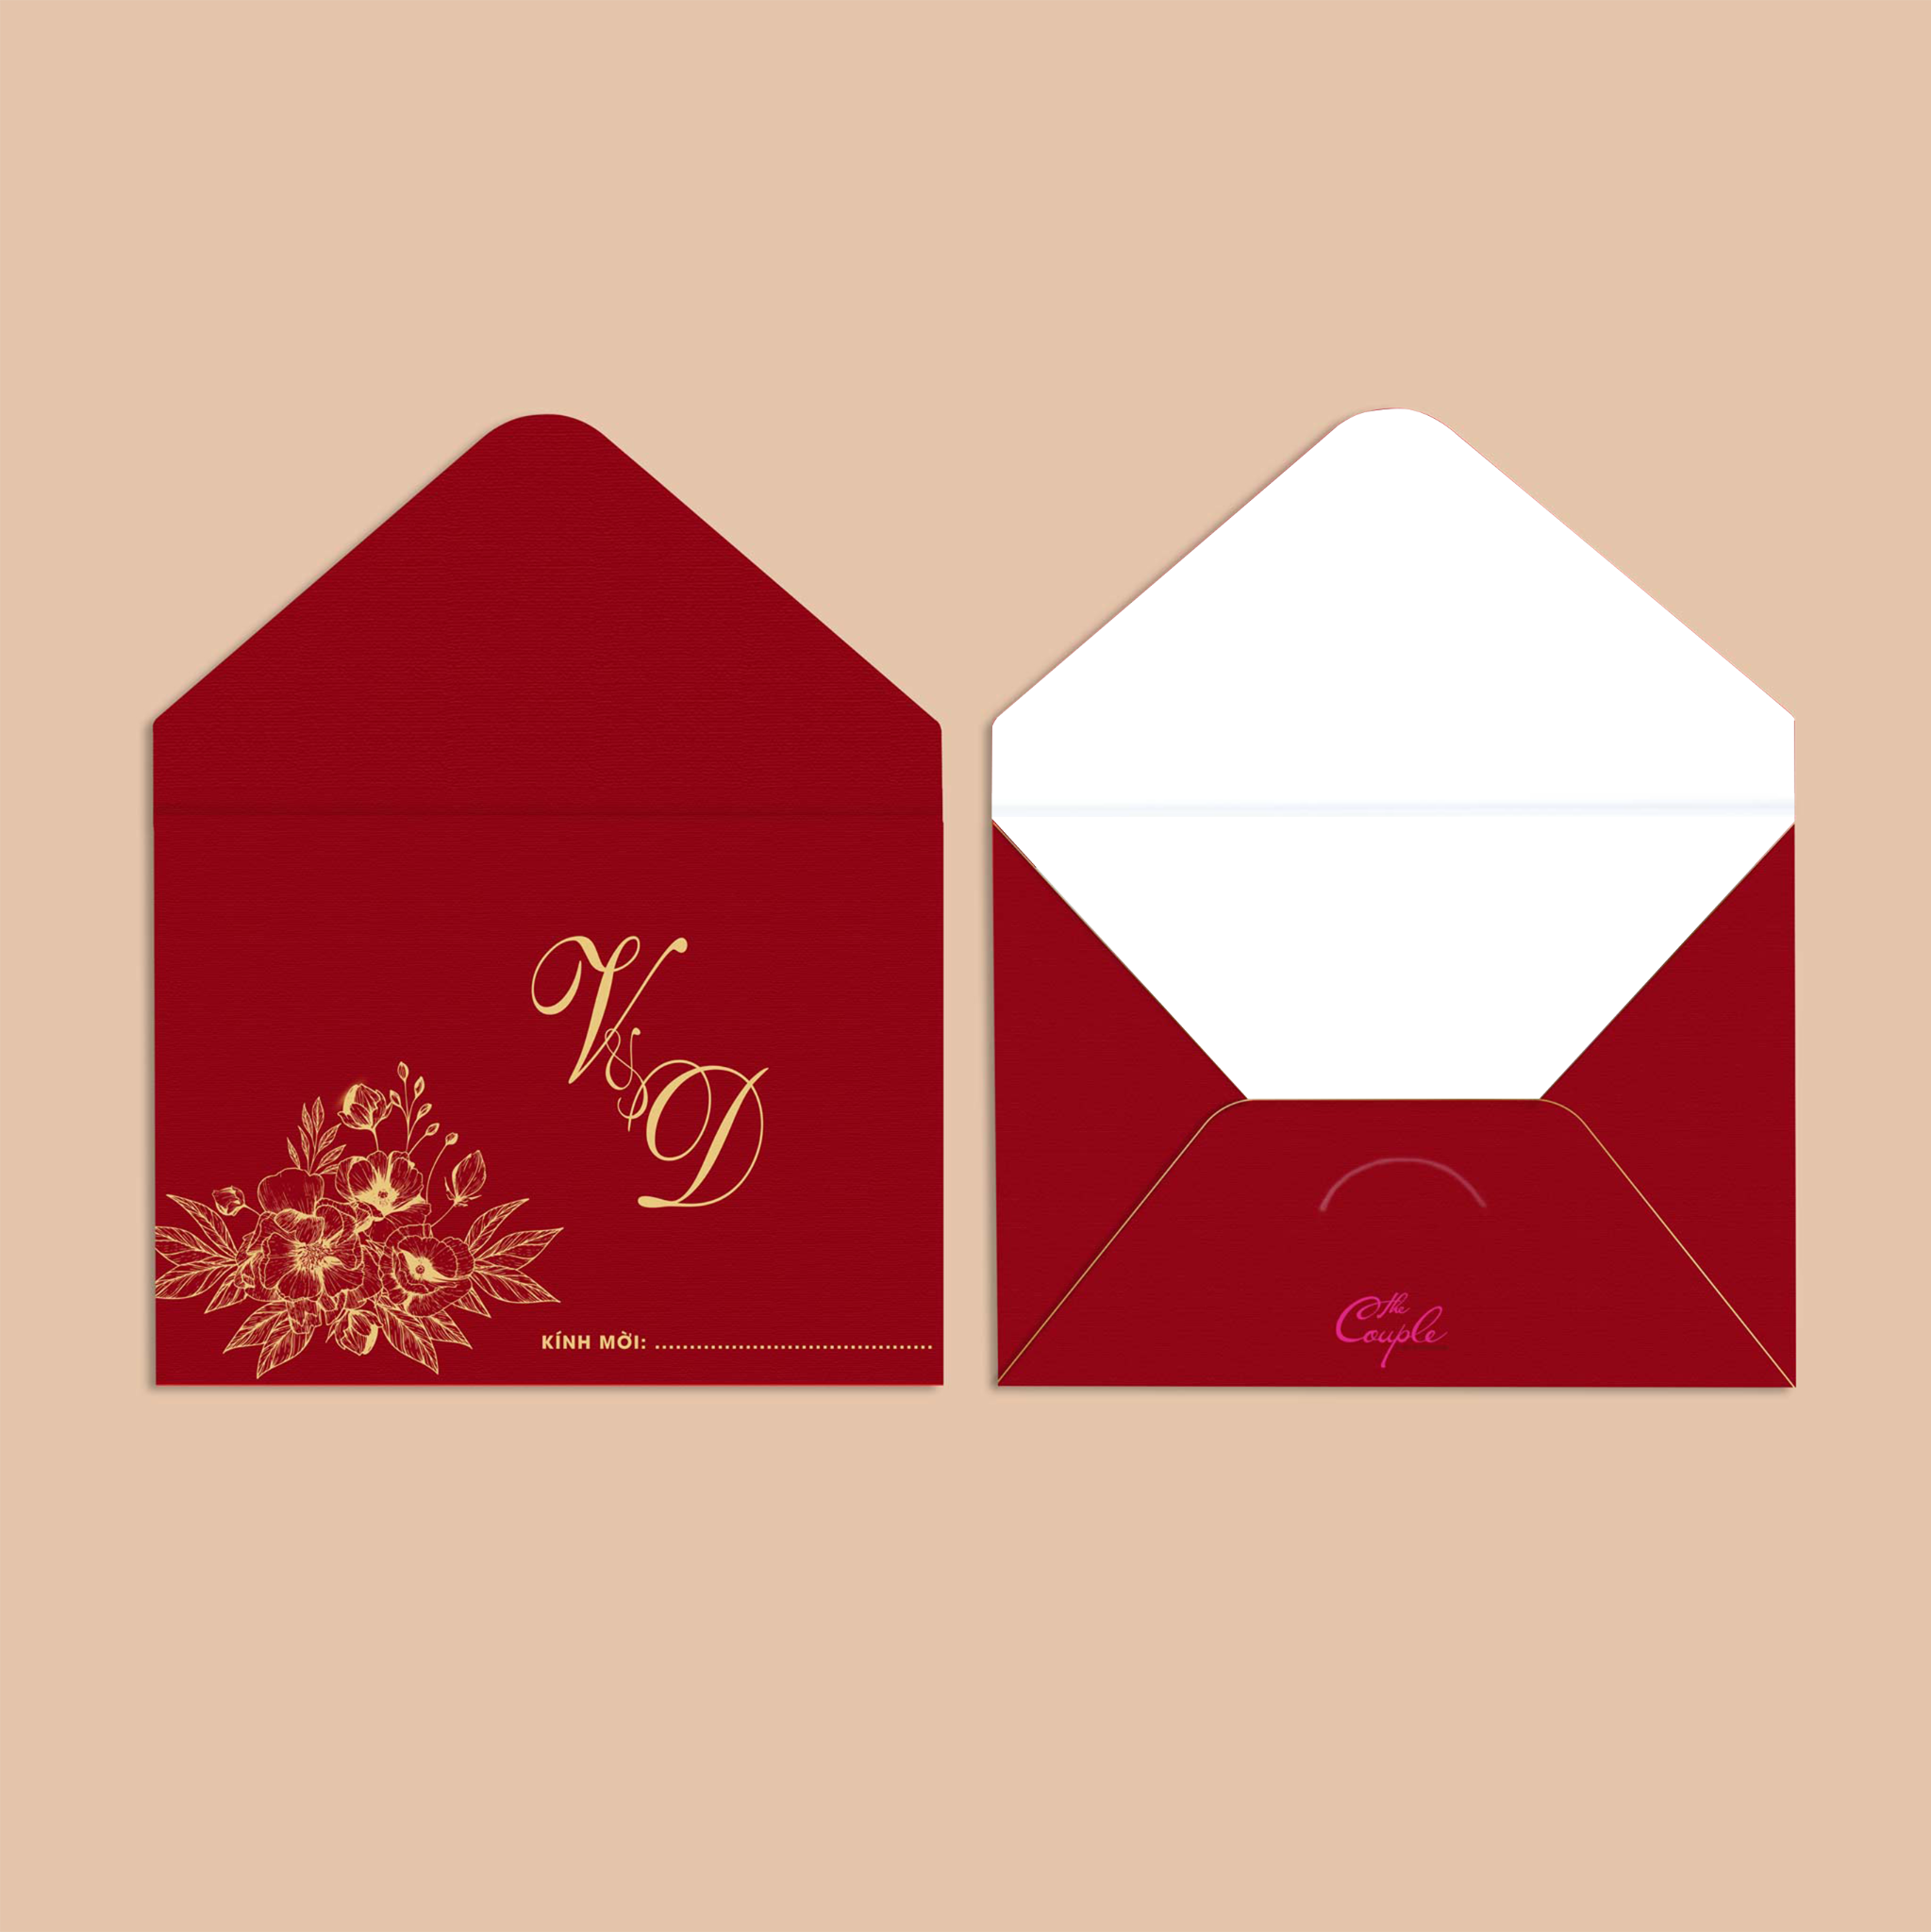  Thiệp cưới MESIO - Thiệp cưới hoa - Thiết kế thiệp cưới in sẵn The Couple 